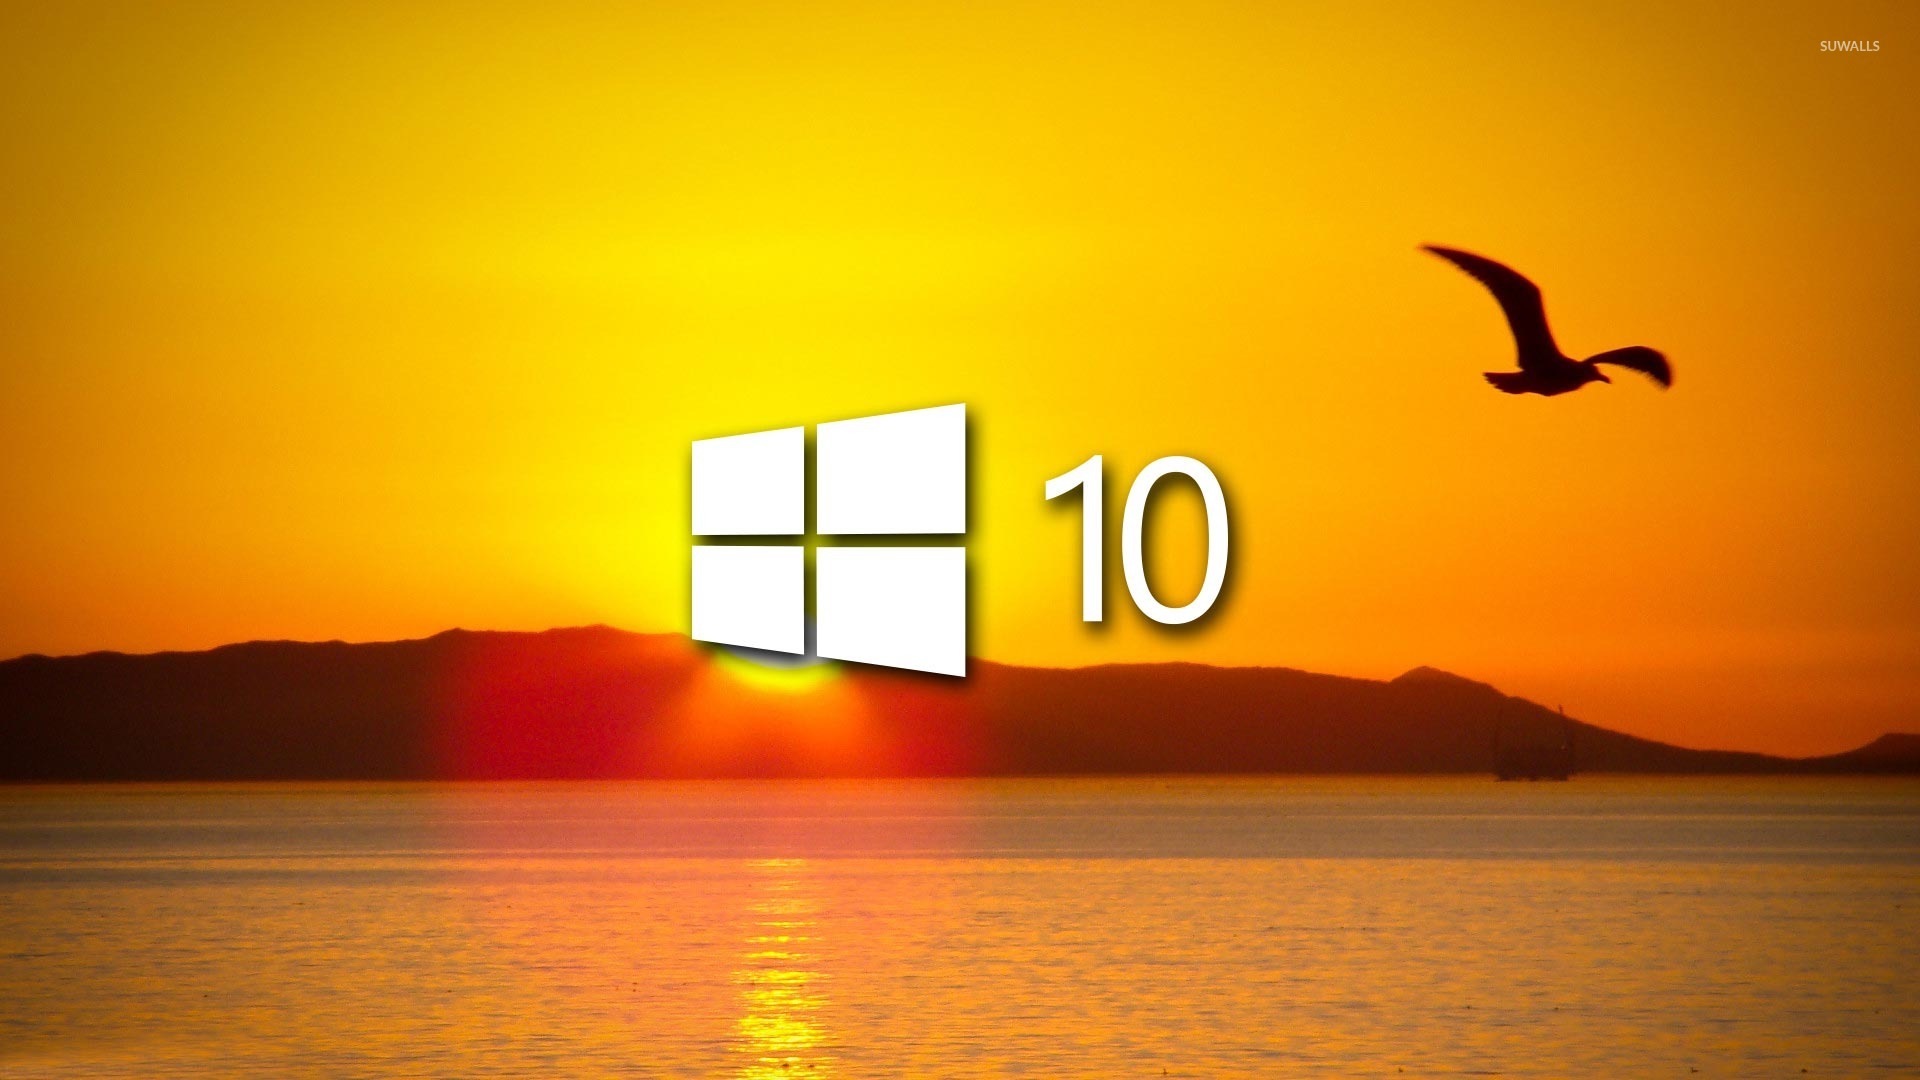 Картинки виндовс 10. Заставка виндовс 10 на рабочий стол. Фоновые рисунки Windows 10. Красивая заставка на рабочий стол виндовс 10. Красивые фоны на рабочий стол для виндовс 11.